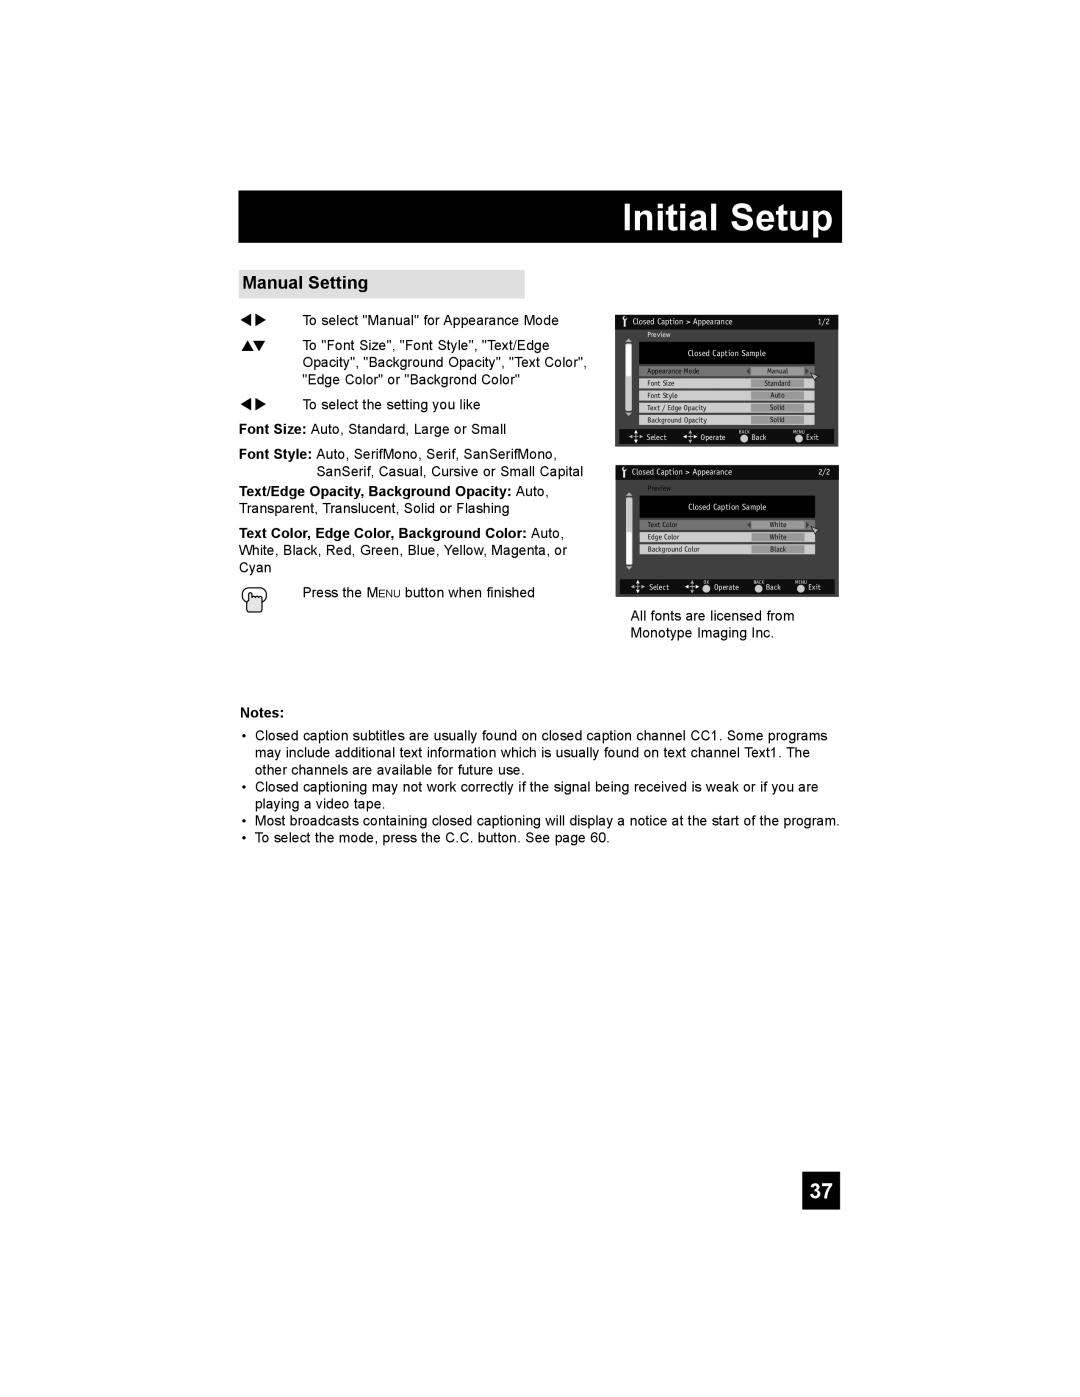 JVC LT-37X688, LT-42X688 manual Manual Setting, Initial Setup 